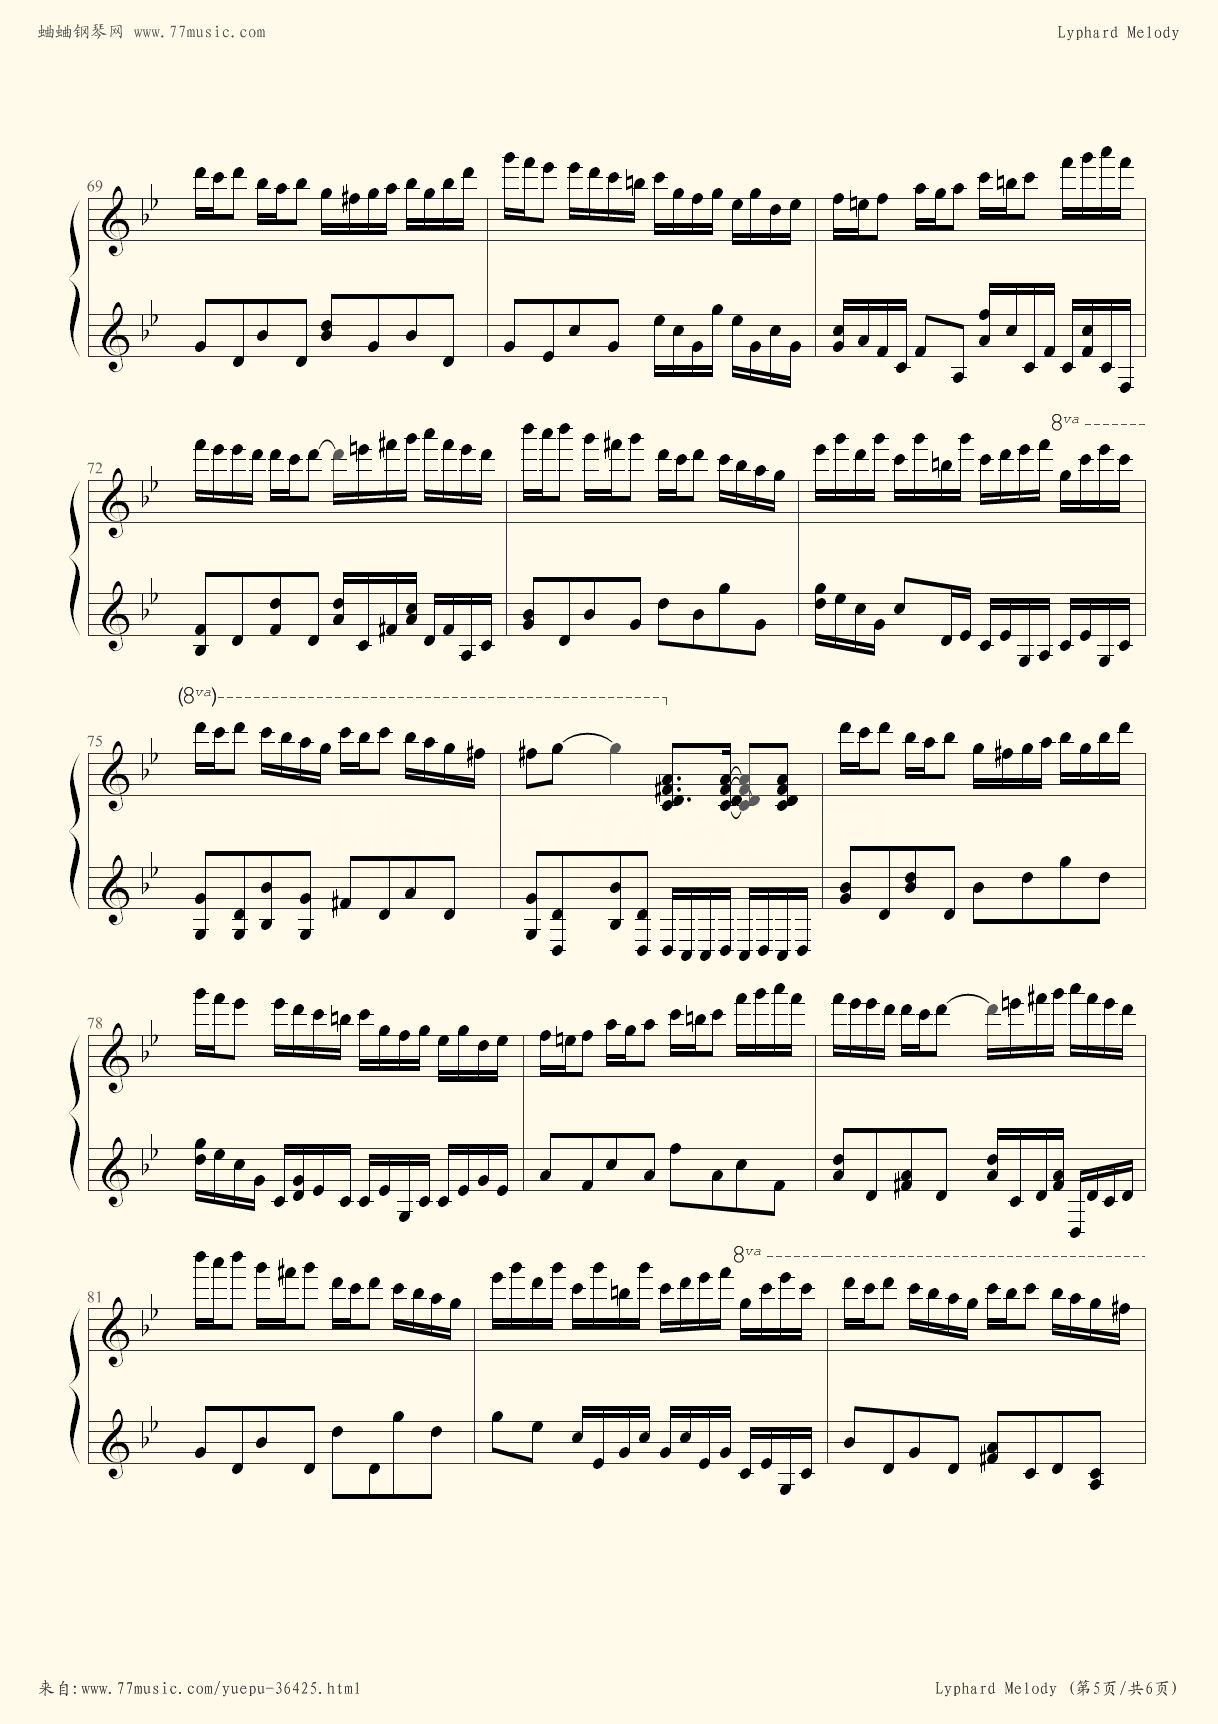 Lyphard Melody - Richard Clayderman - Flash Version2 Piano Sheet Music Free